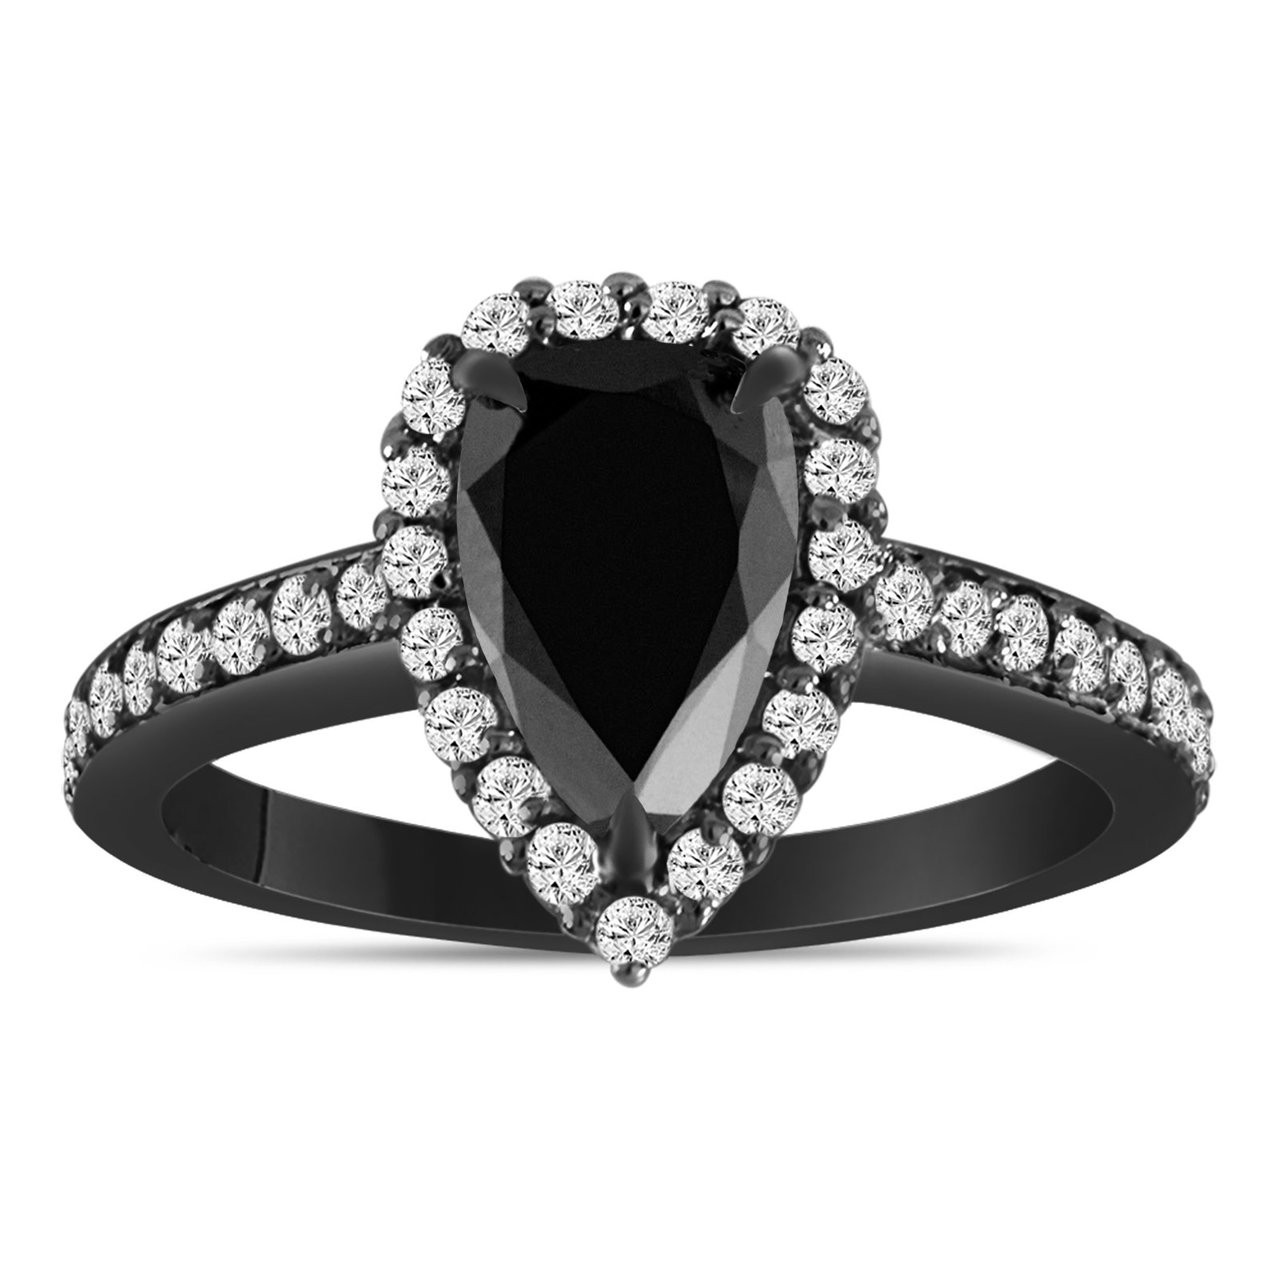 1.75 Carat Pear Shape Black Diamond Engagement Ring Black Diamond Wedding Ring Halo Vintage Ring 14k Black Gold Unique Handmade Certified 1  36132.1538764657 ?c=2&imbypass=on